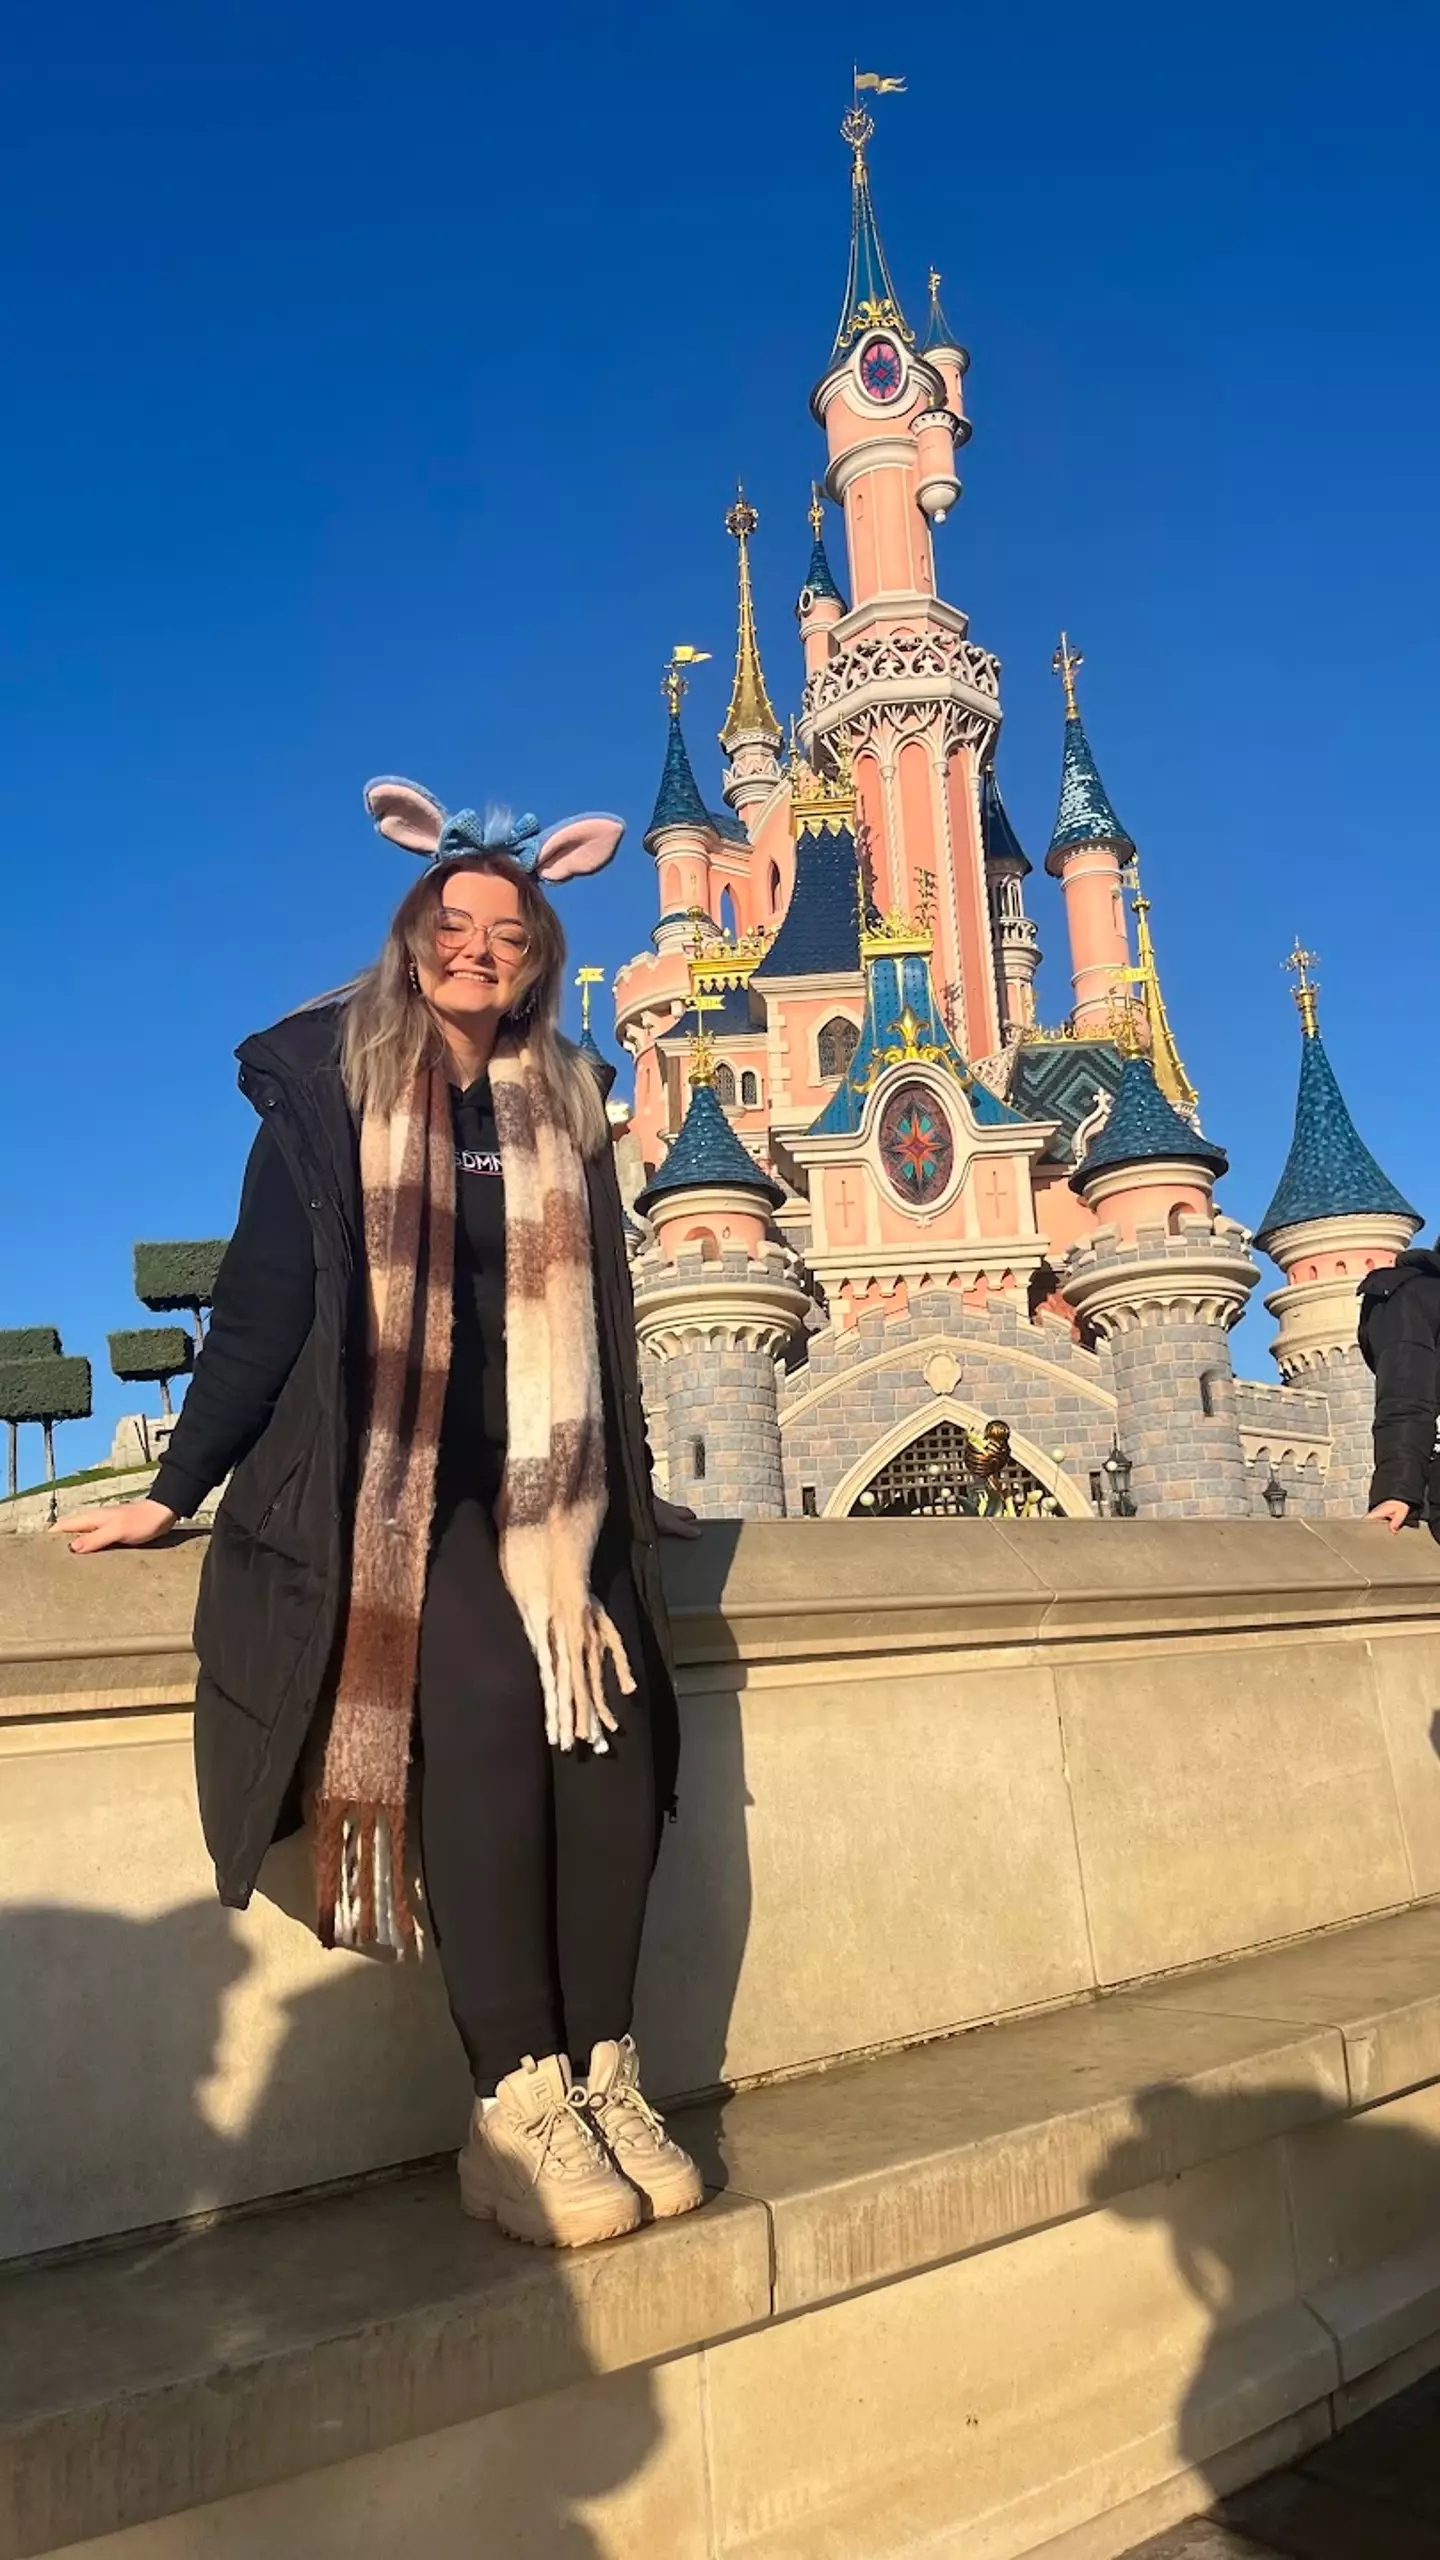 Disneyland was 'easily the best' part of the Paris trip.